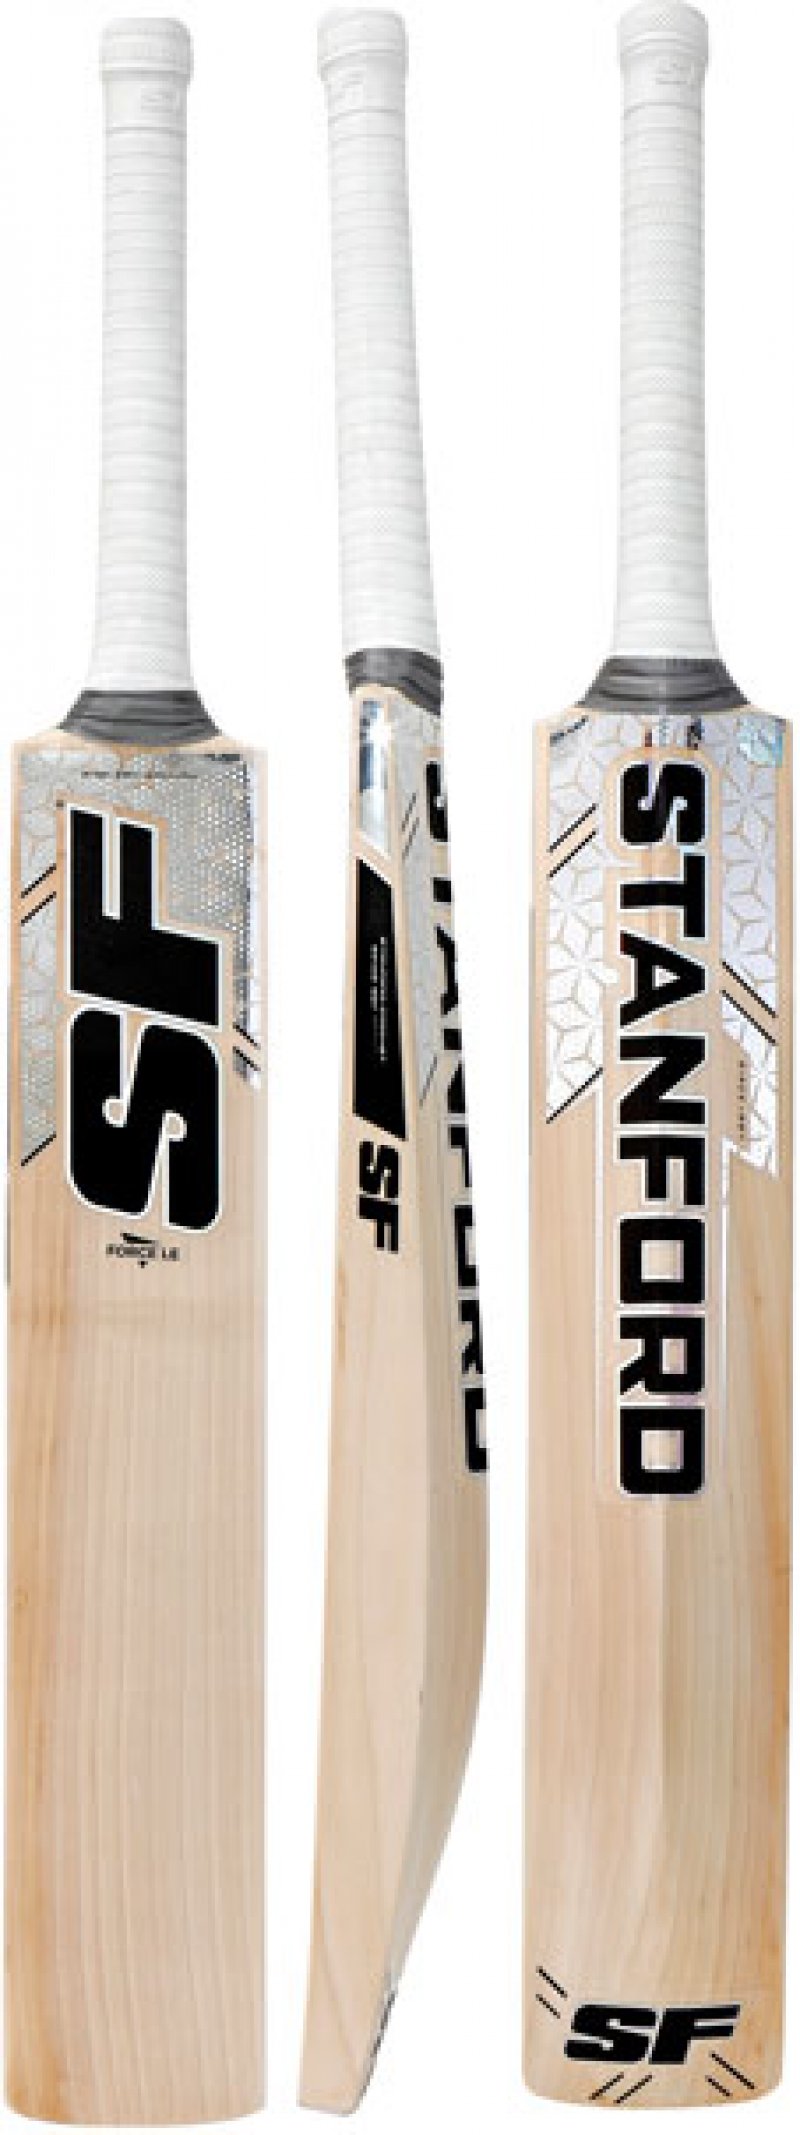 SF Stanford Force LE Cricket Bat